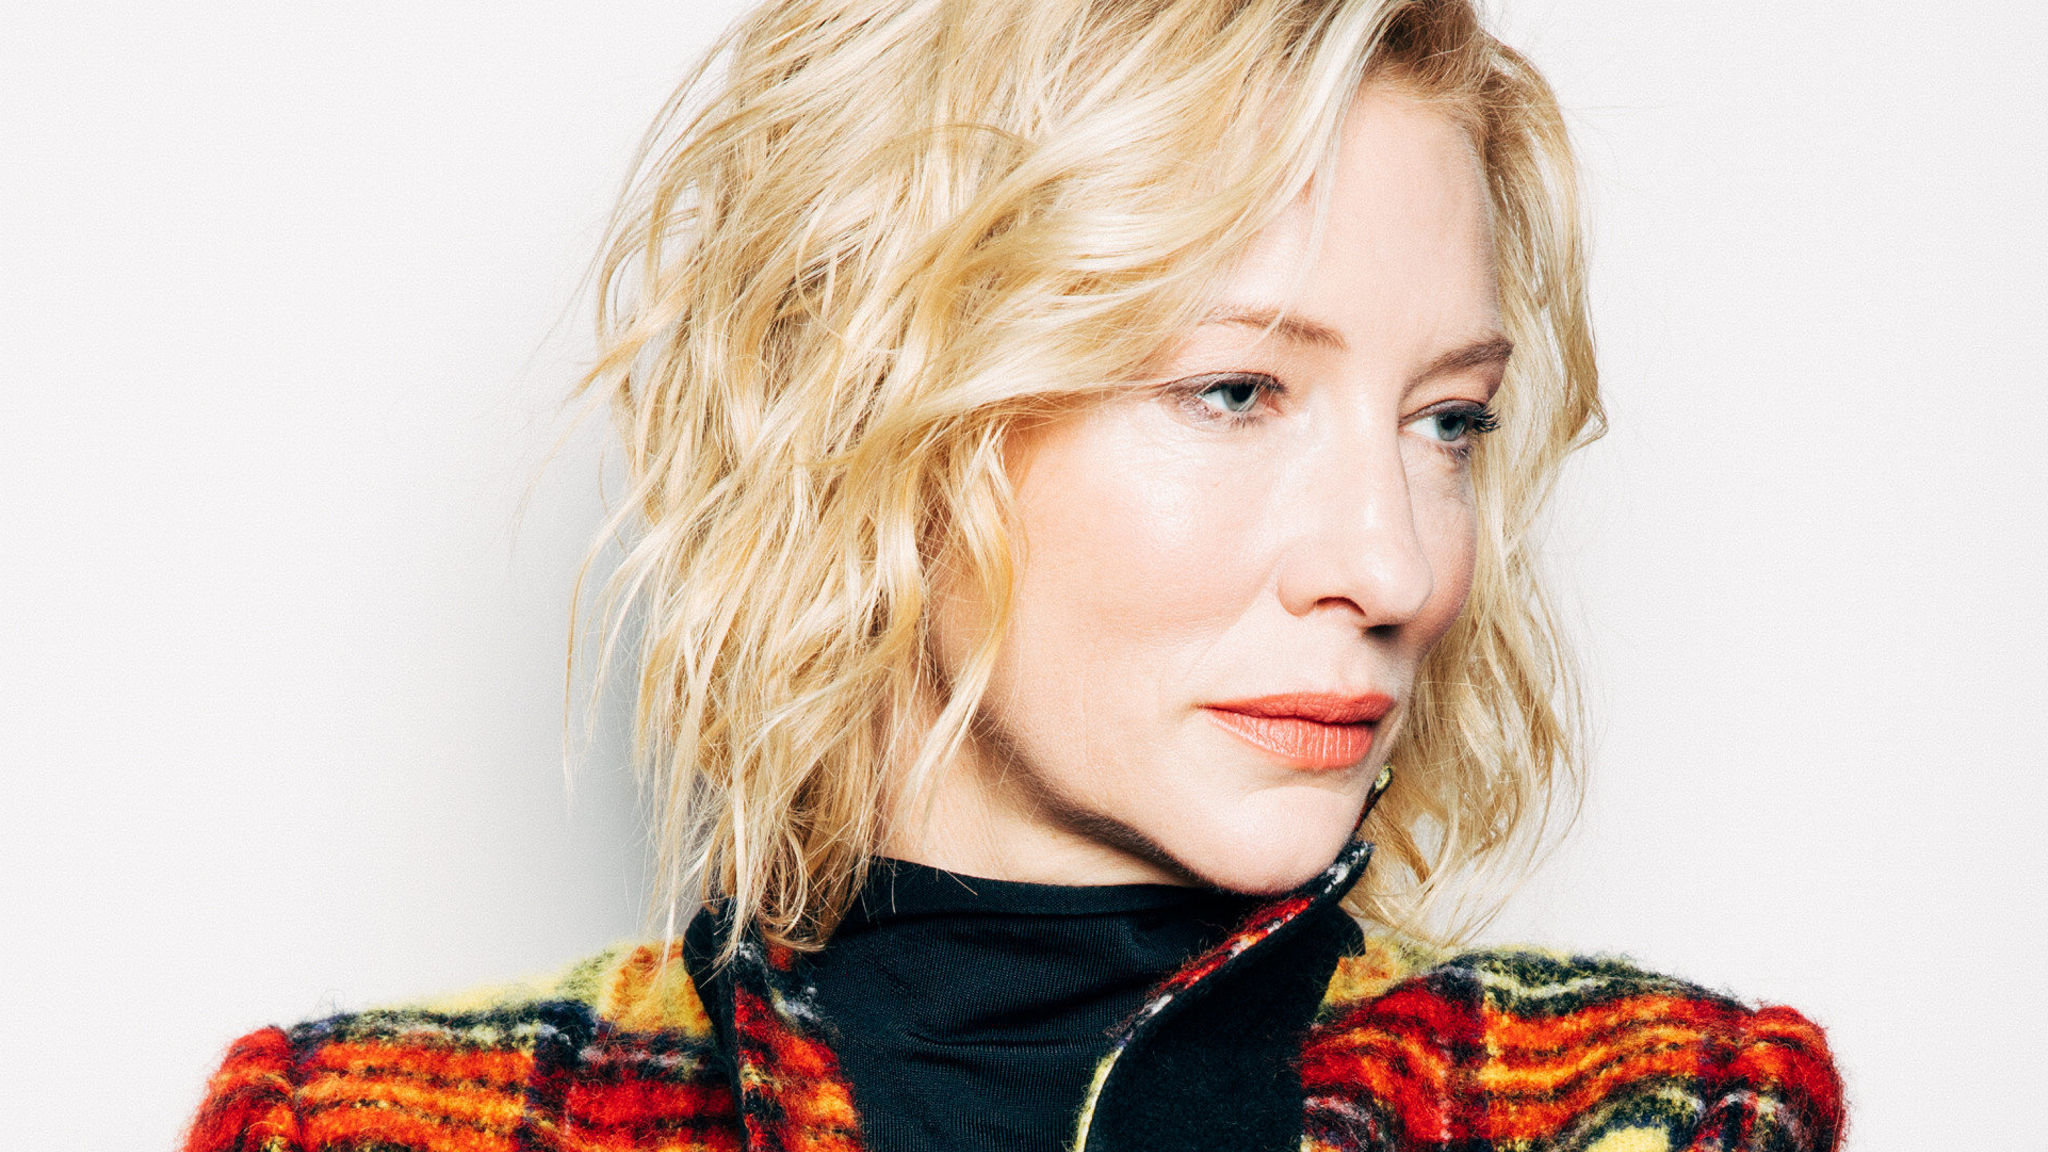 Cate Blanchett In Mrs America 2020 Wallpapers